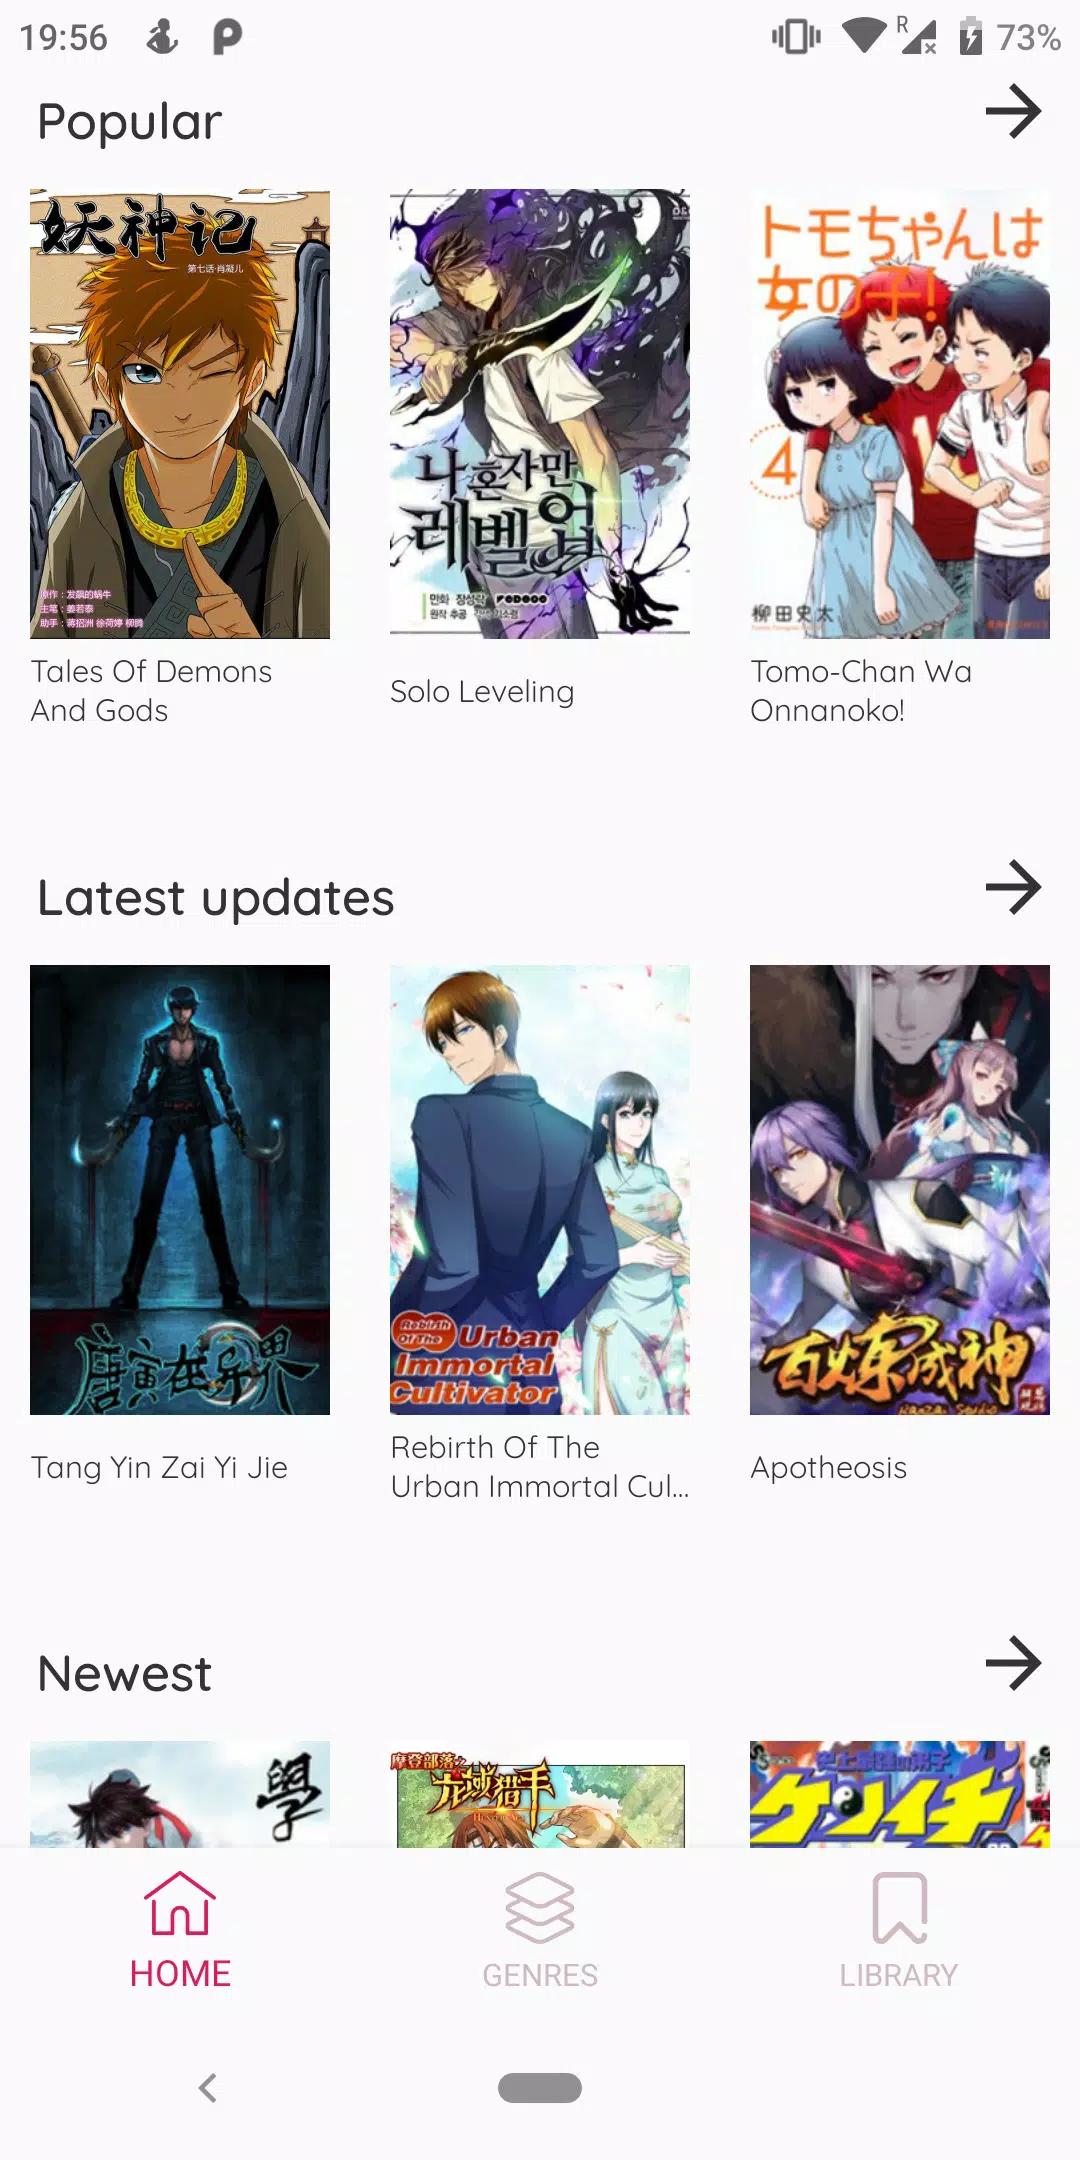 Super Manga - Manga Reader Apk Download for Android- Latest